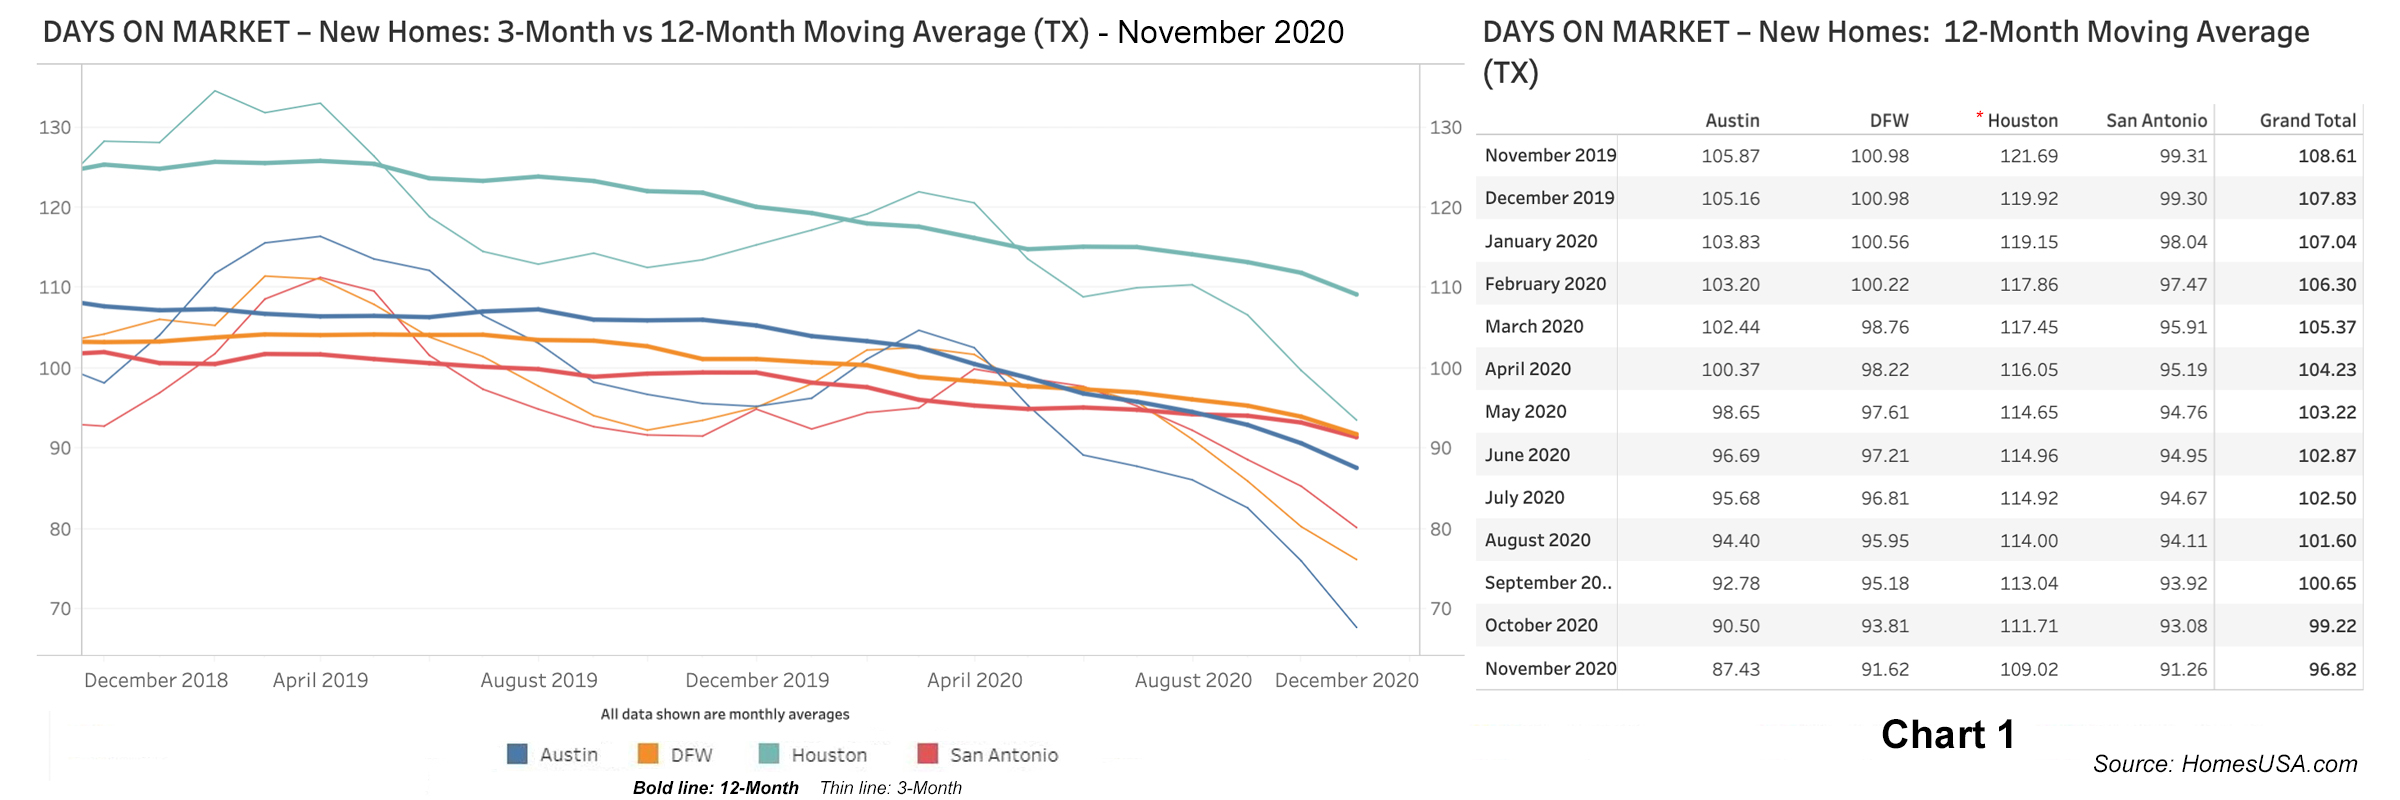 Chart 1: Texas New Homes: Days on Market - November 2020